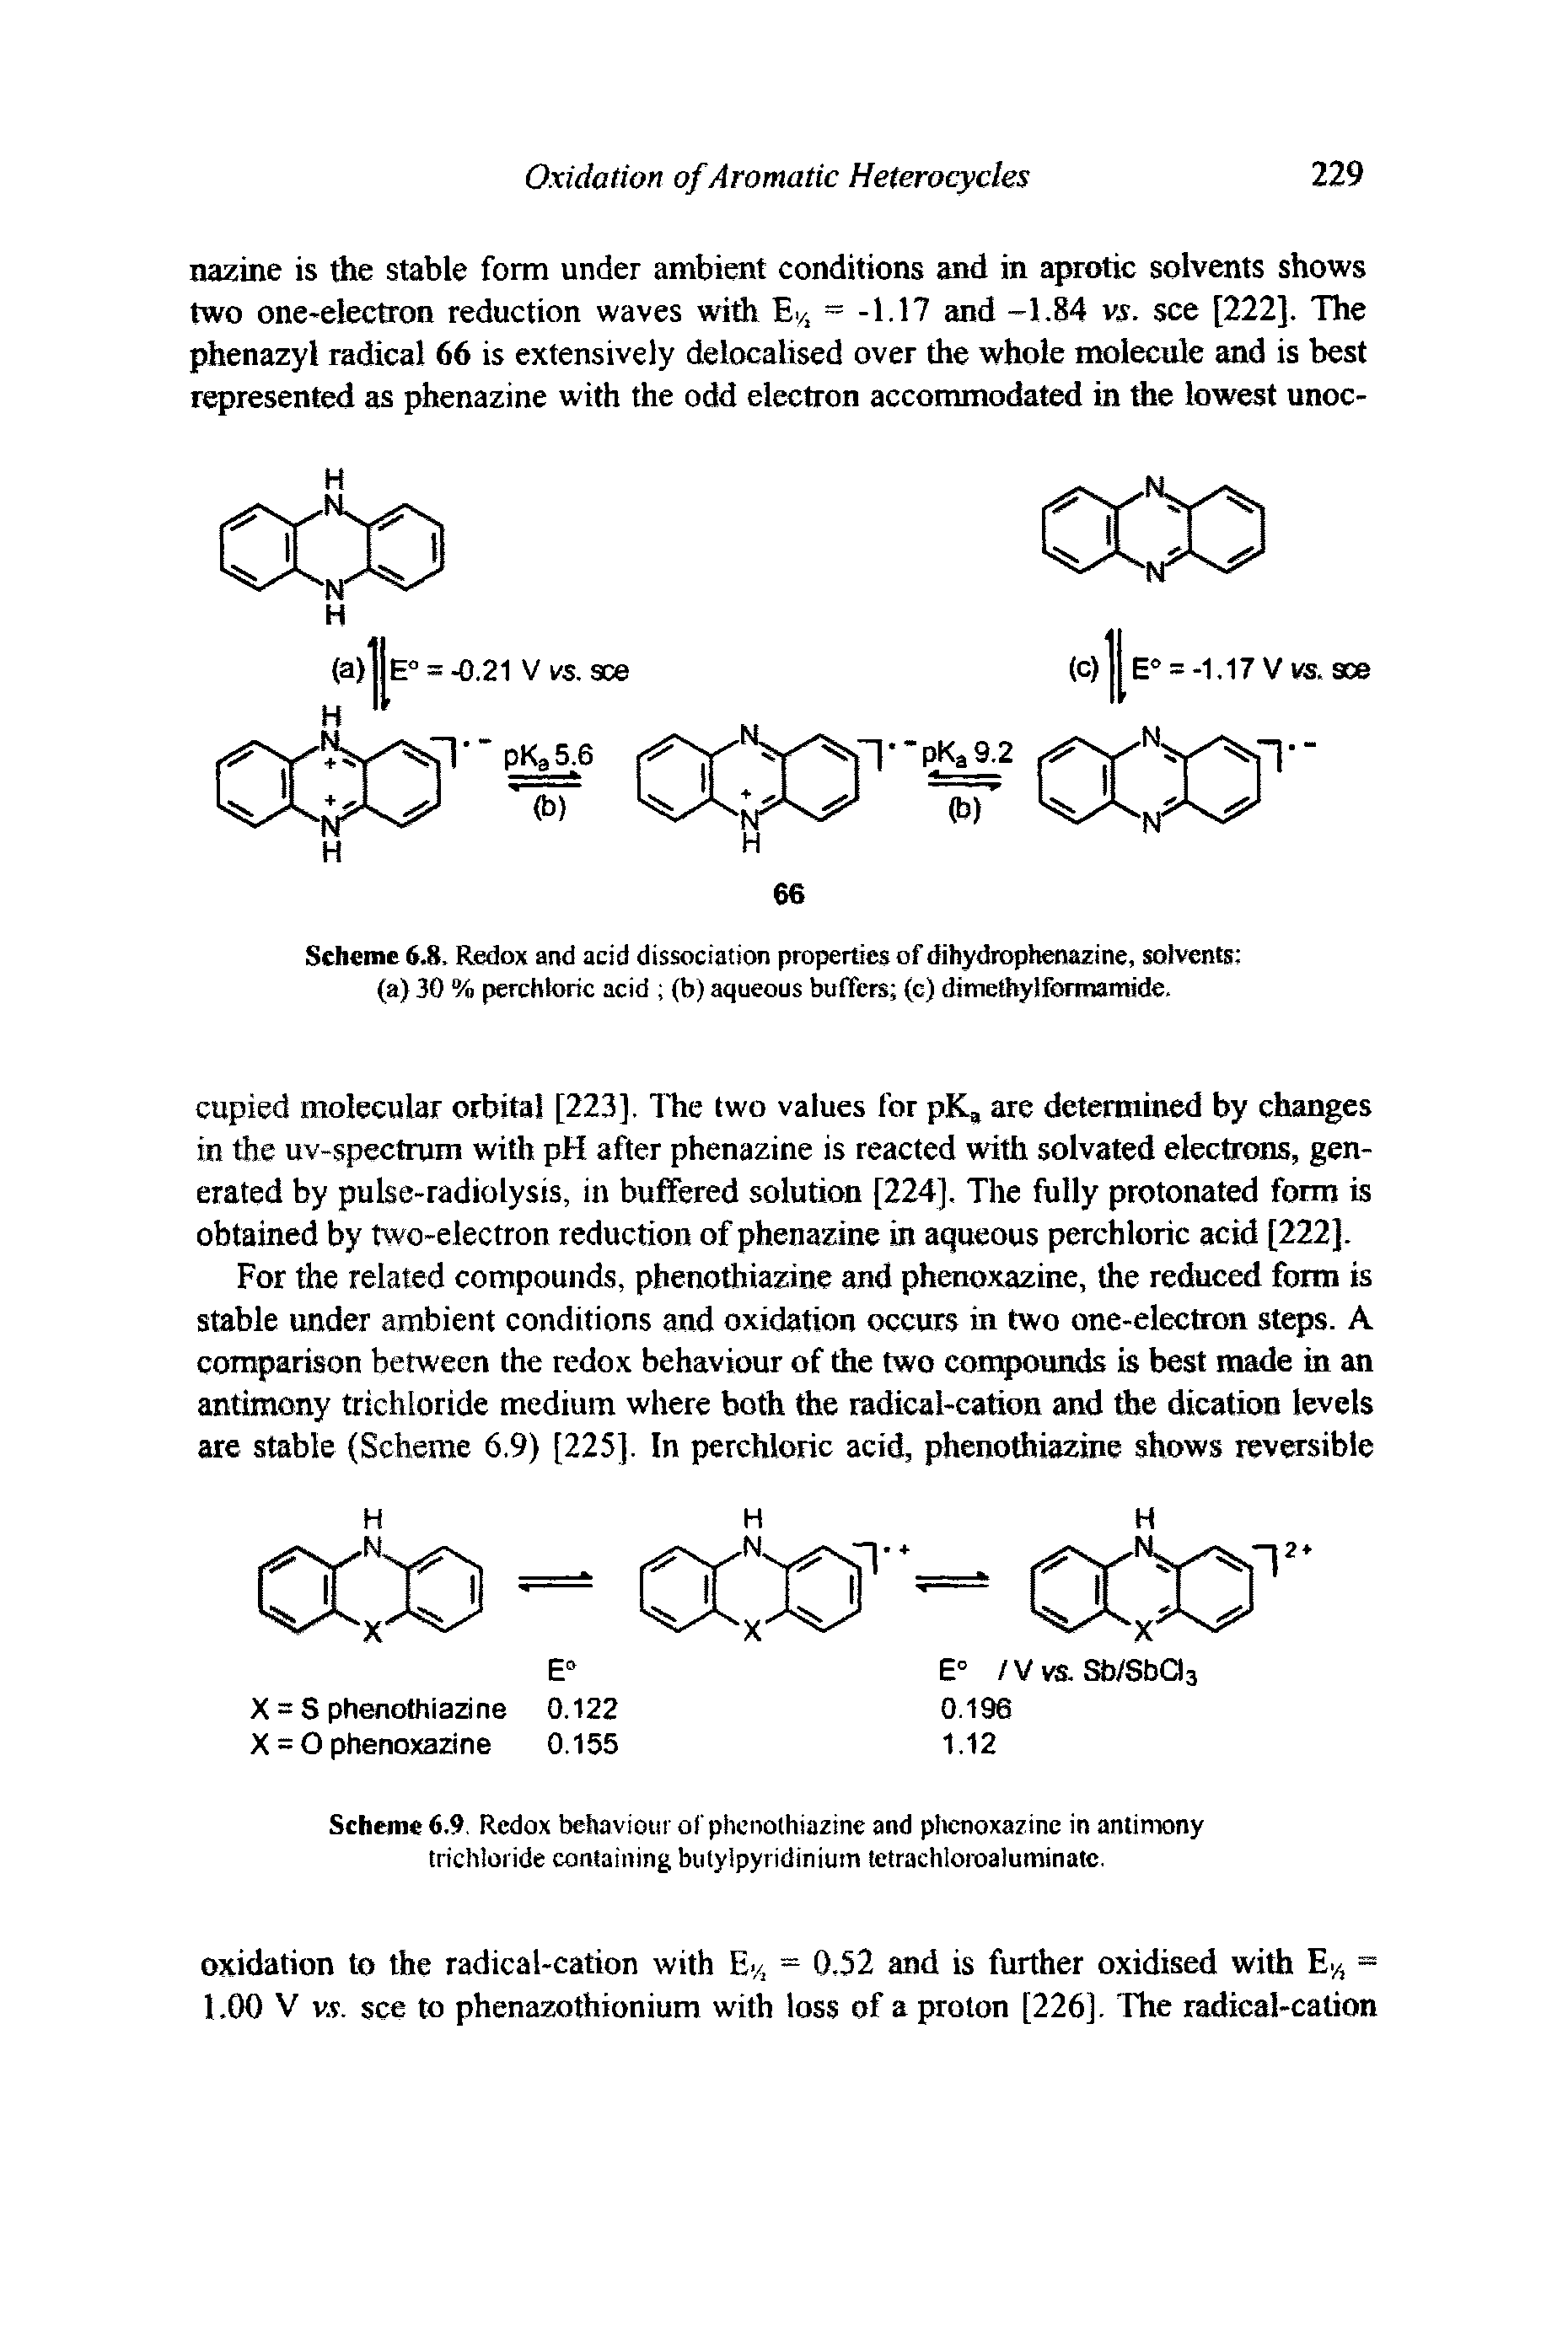 Scheme 6.8. Redox and acid dissociation properties of dihydiophenazine, solvents (a) 30 % perchloric acid (b) aqueous buffers (c) dimethylformamide.